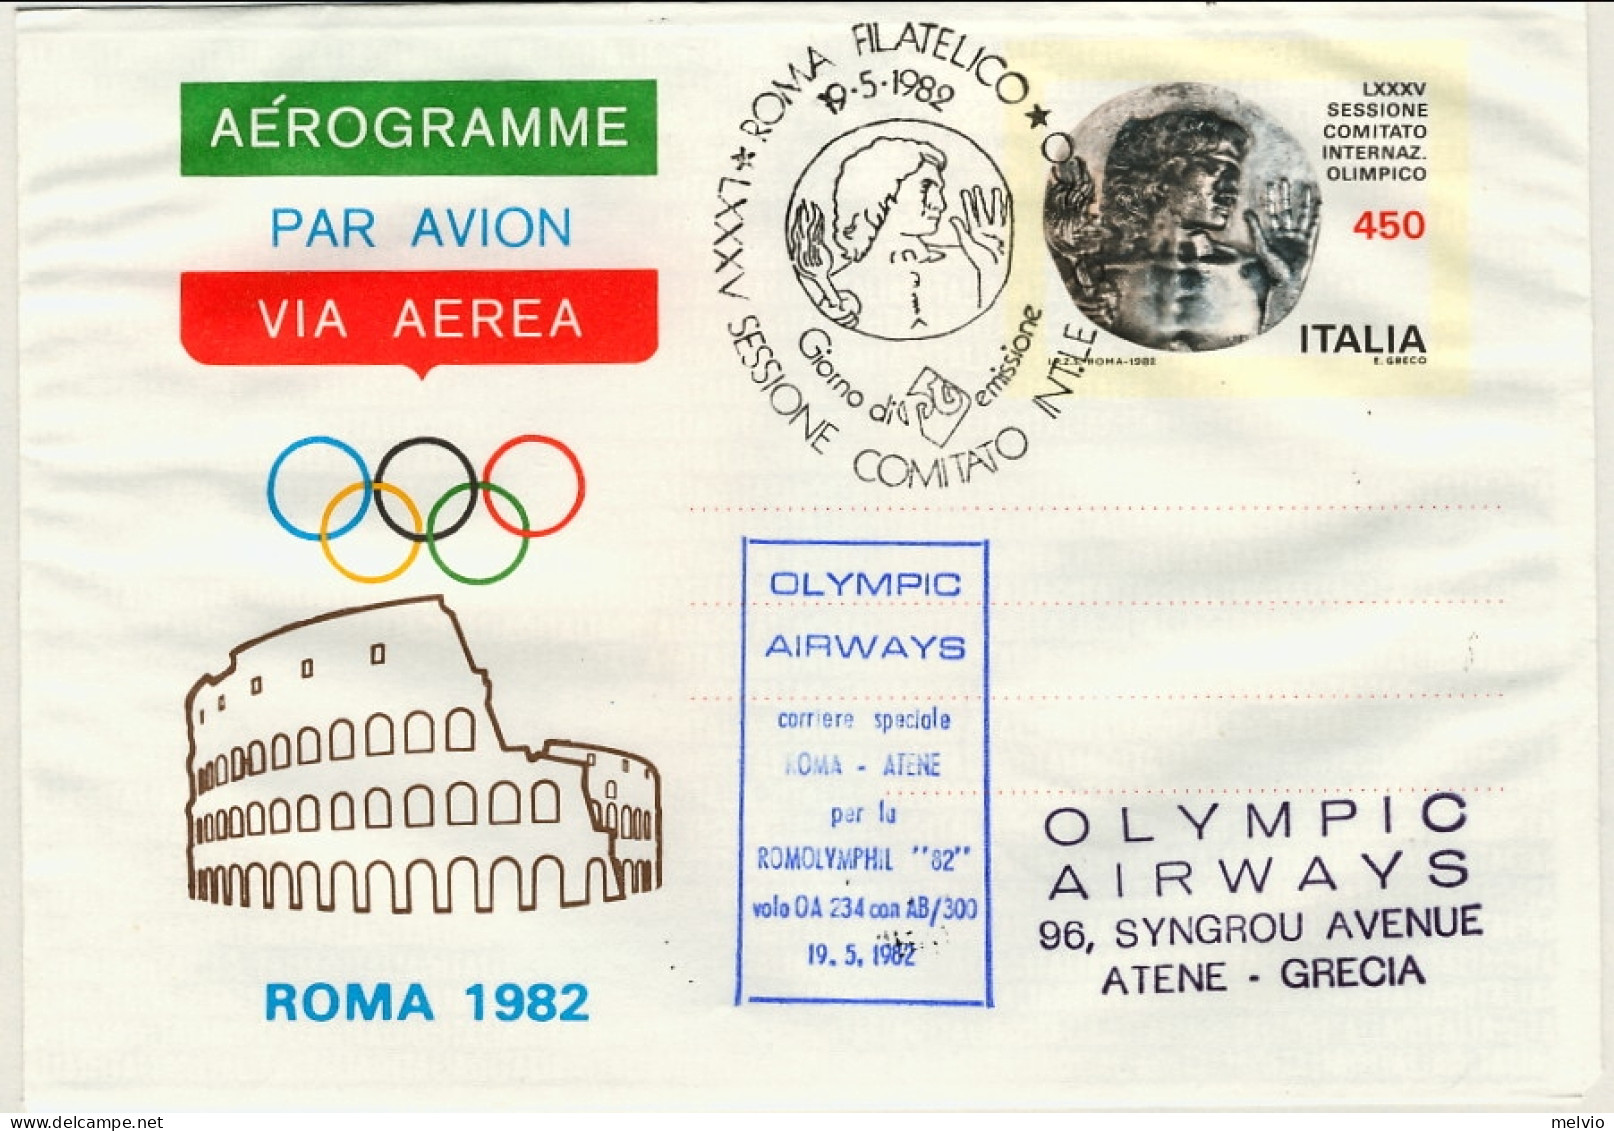 1982-L.450 LXXXV Sessione Comitato Internaz.olimpico Bollo Olympic Airways Roma  - 1981-90: Poststempel